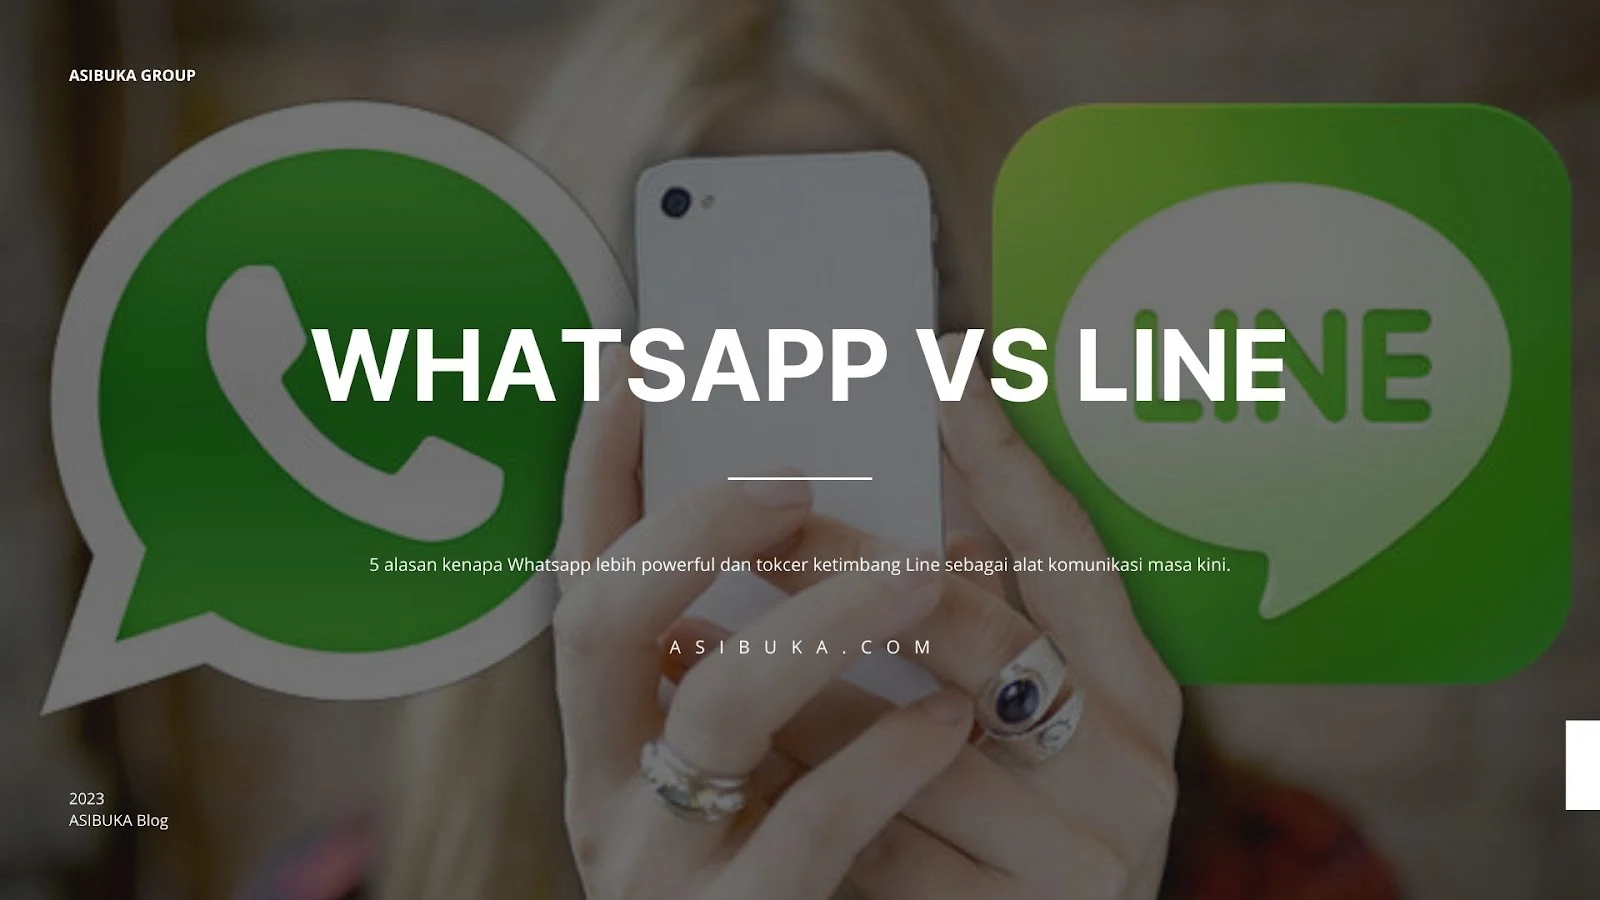 5 Alasan Whatsapp Lebih dari Line